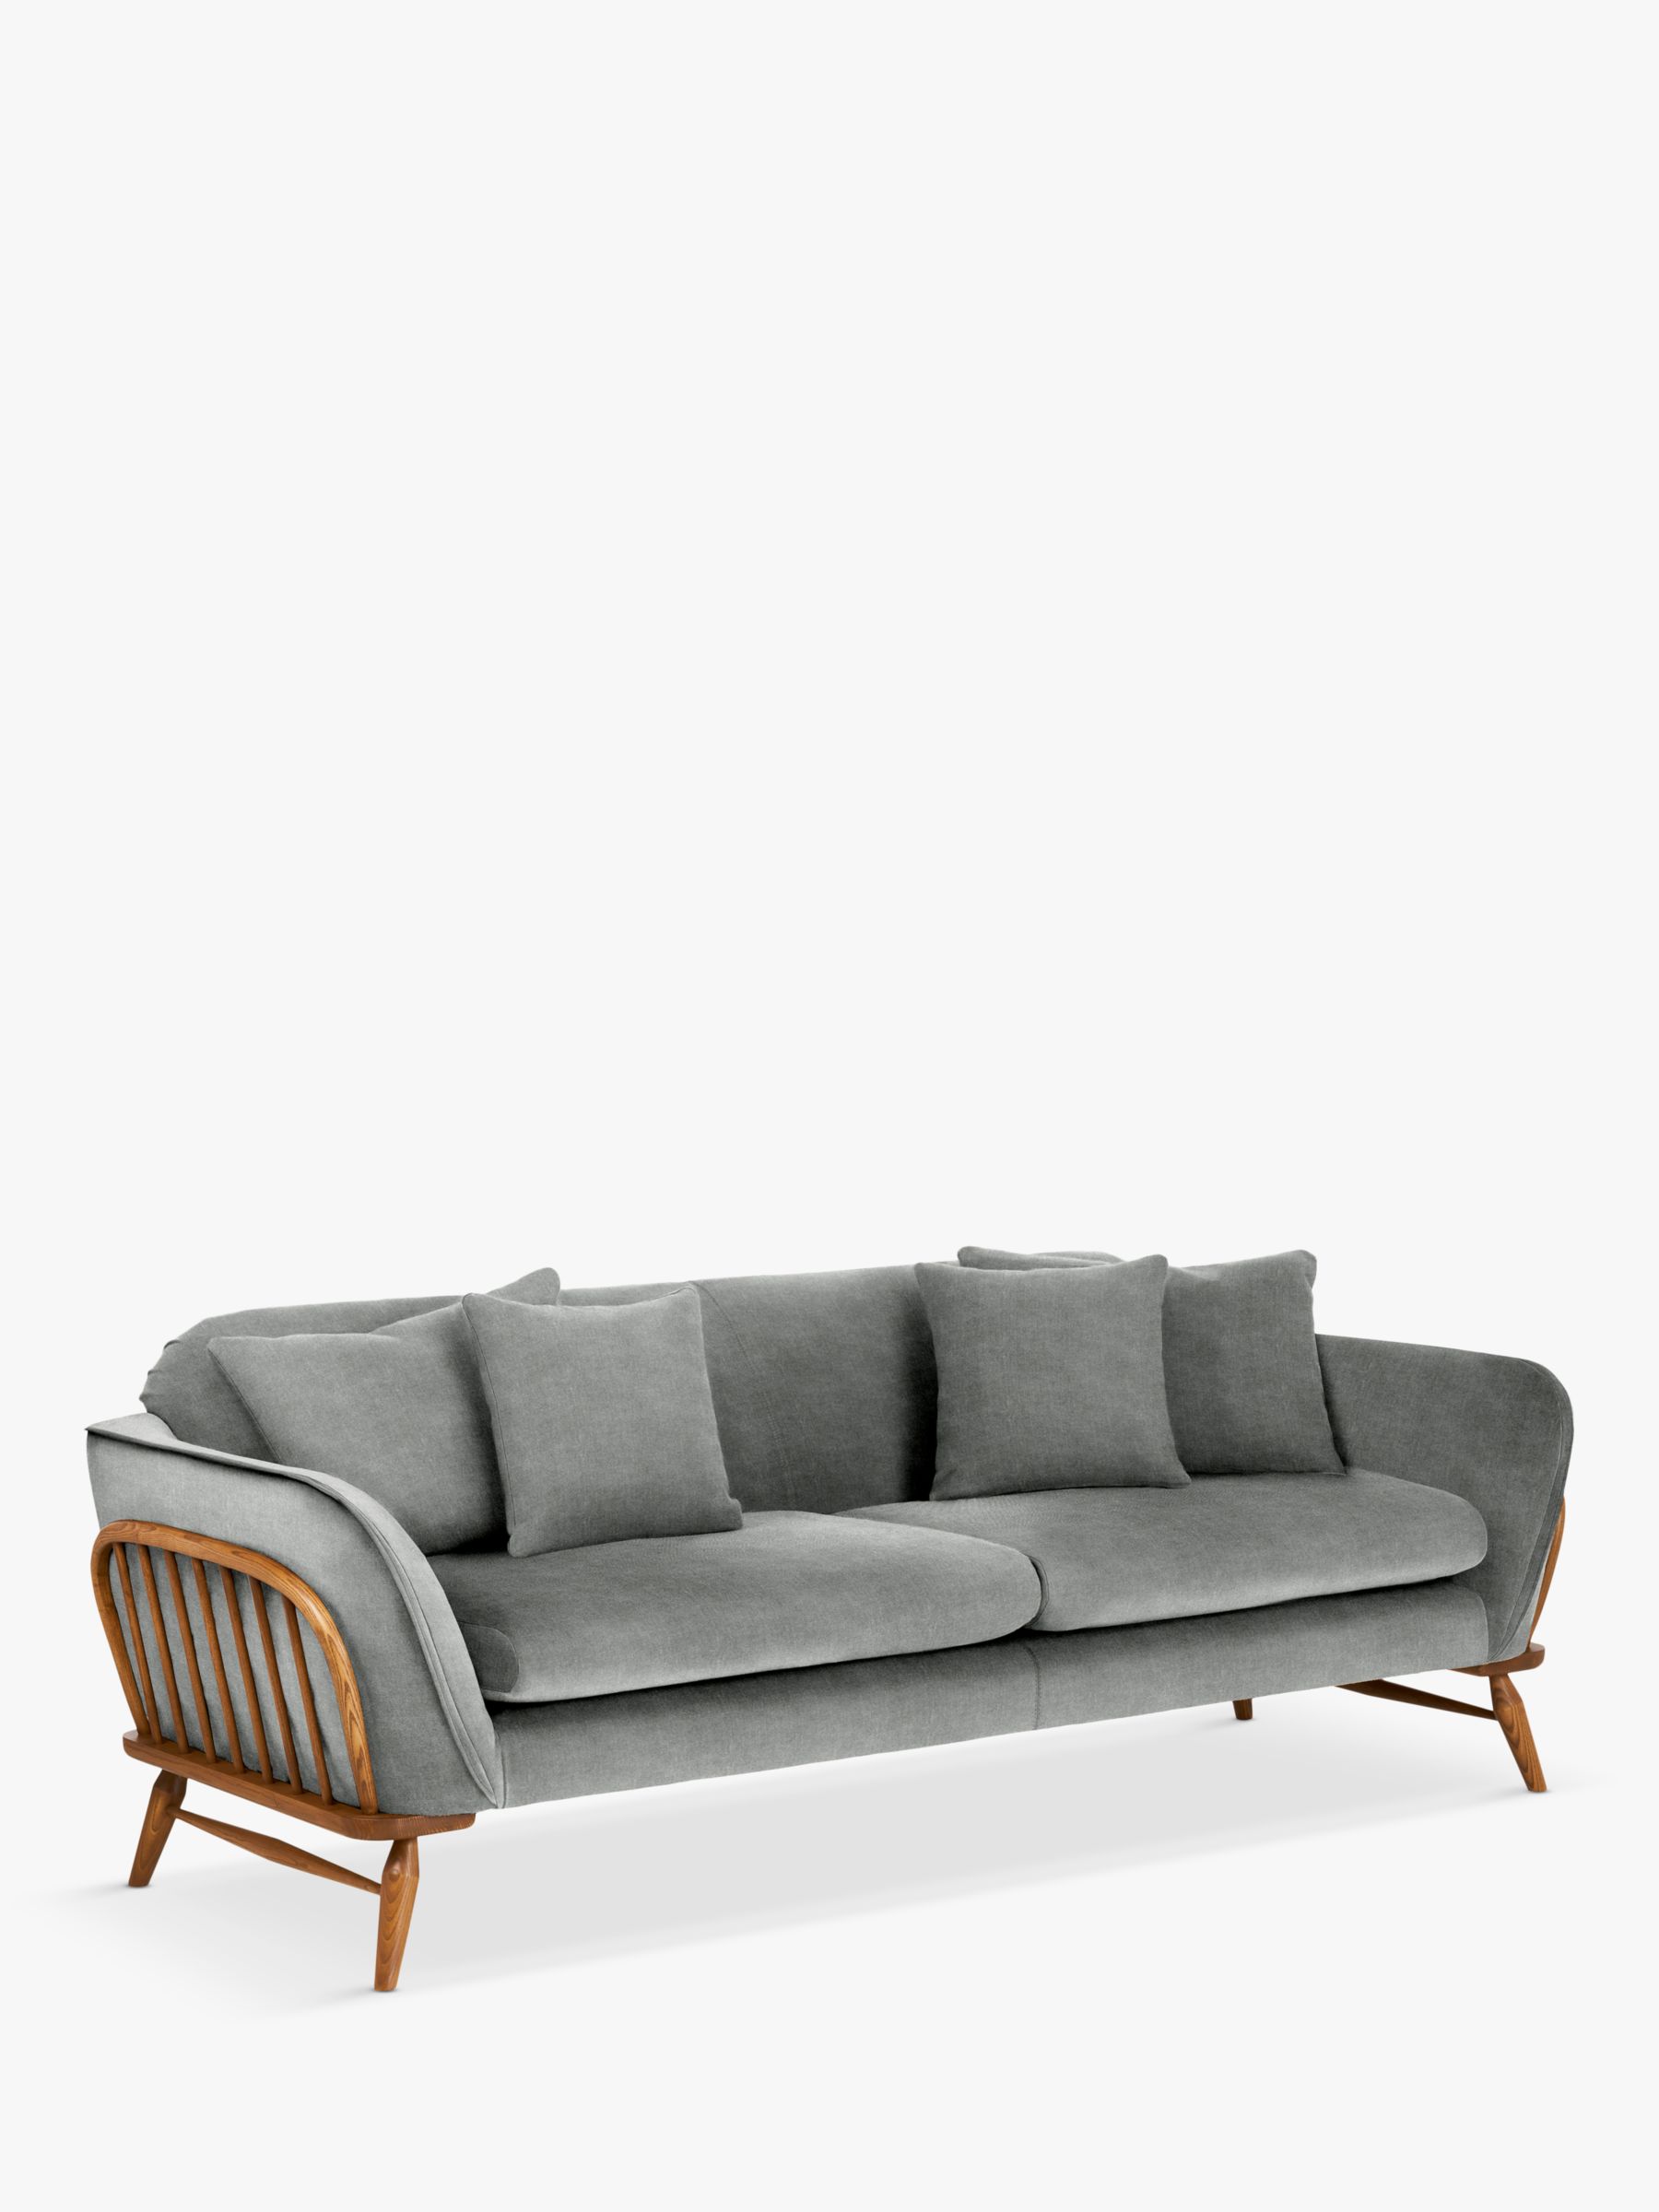 Hexton Range, ercol for John Lewis Hexton Large 2 Seater Sofa, Vintage Ash Leg, Soft Chenille Grey